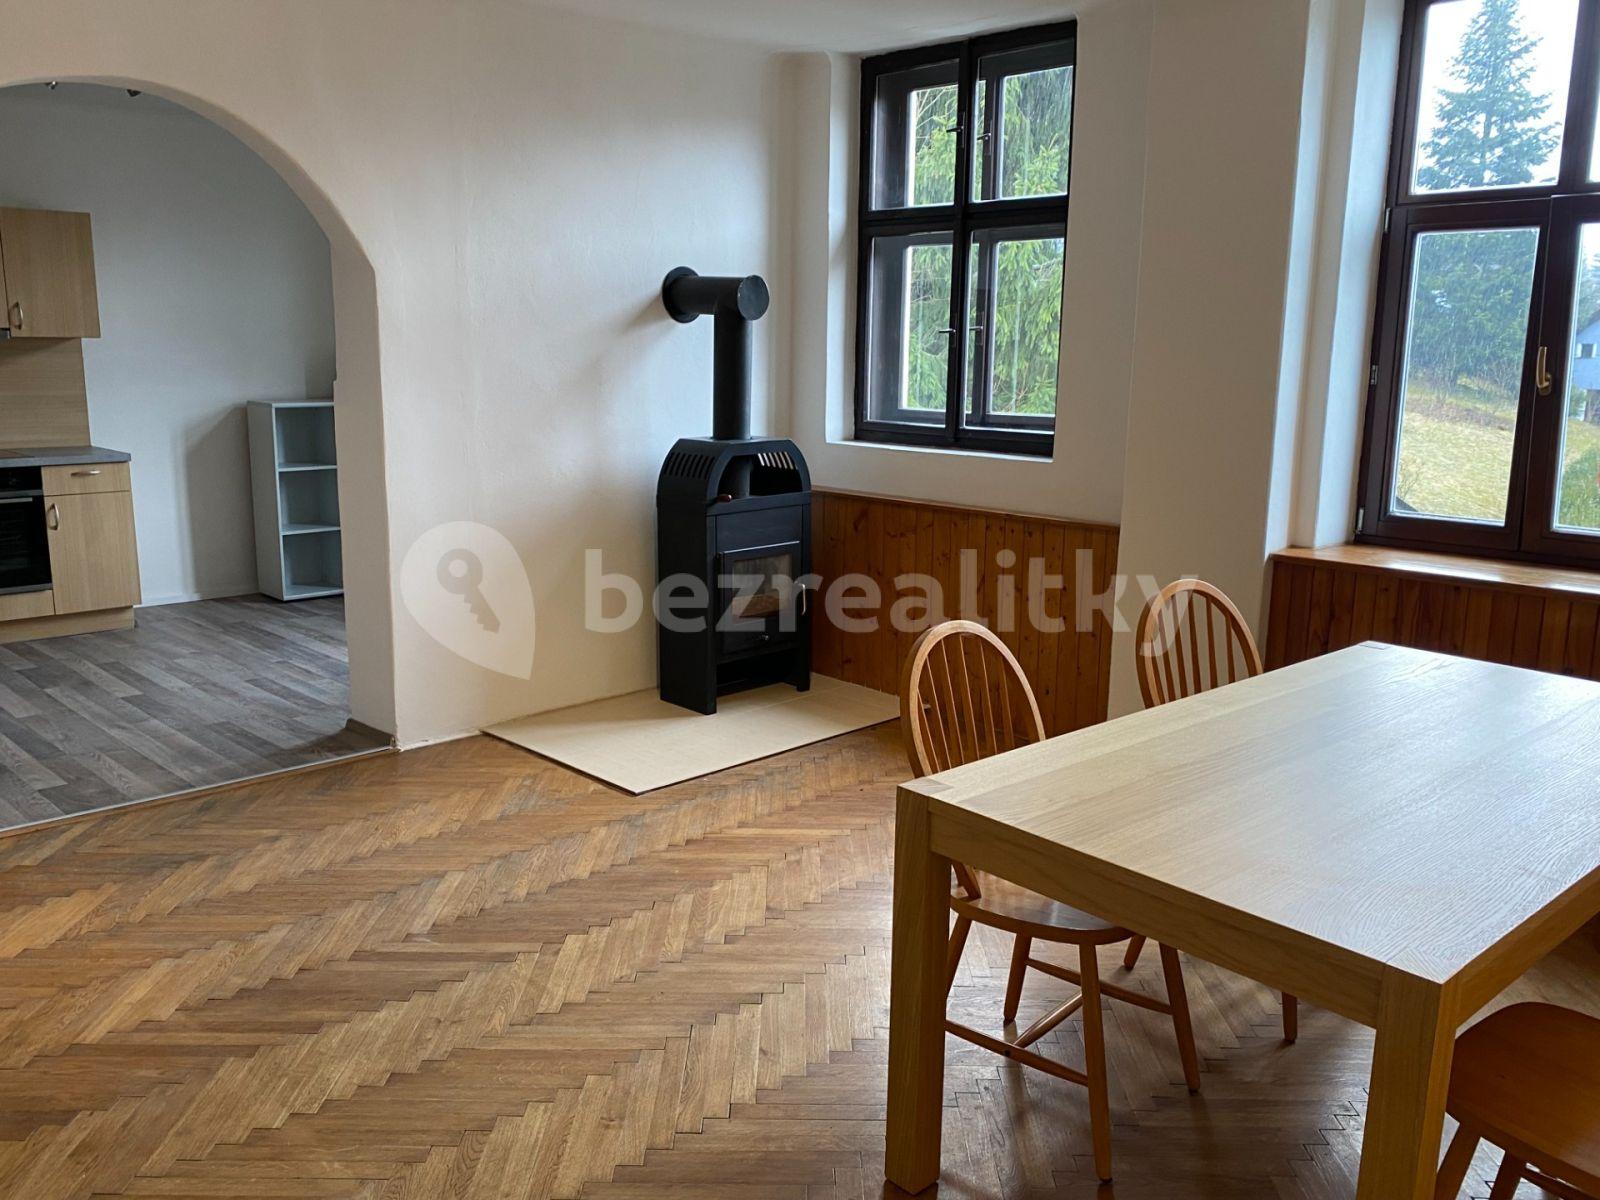 3 bedroom flat to rent, 85 m², Rokytnice nad Jizerou, Liberecký Region